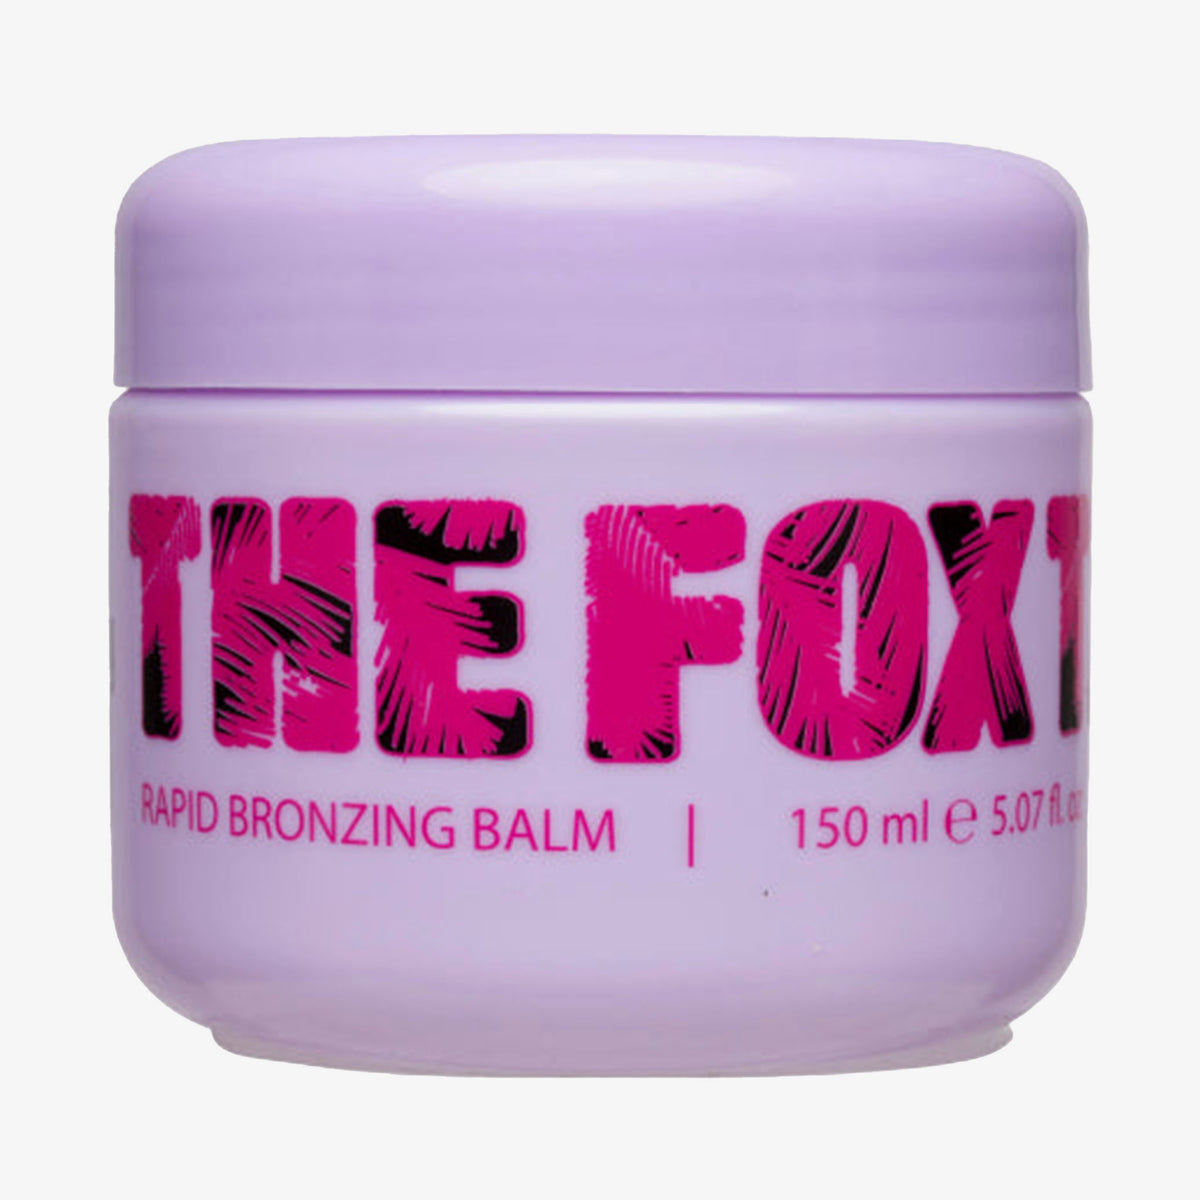 The Fox Tan | Rapid Bronzing Balm